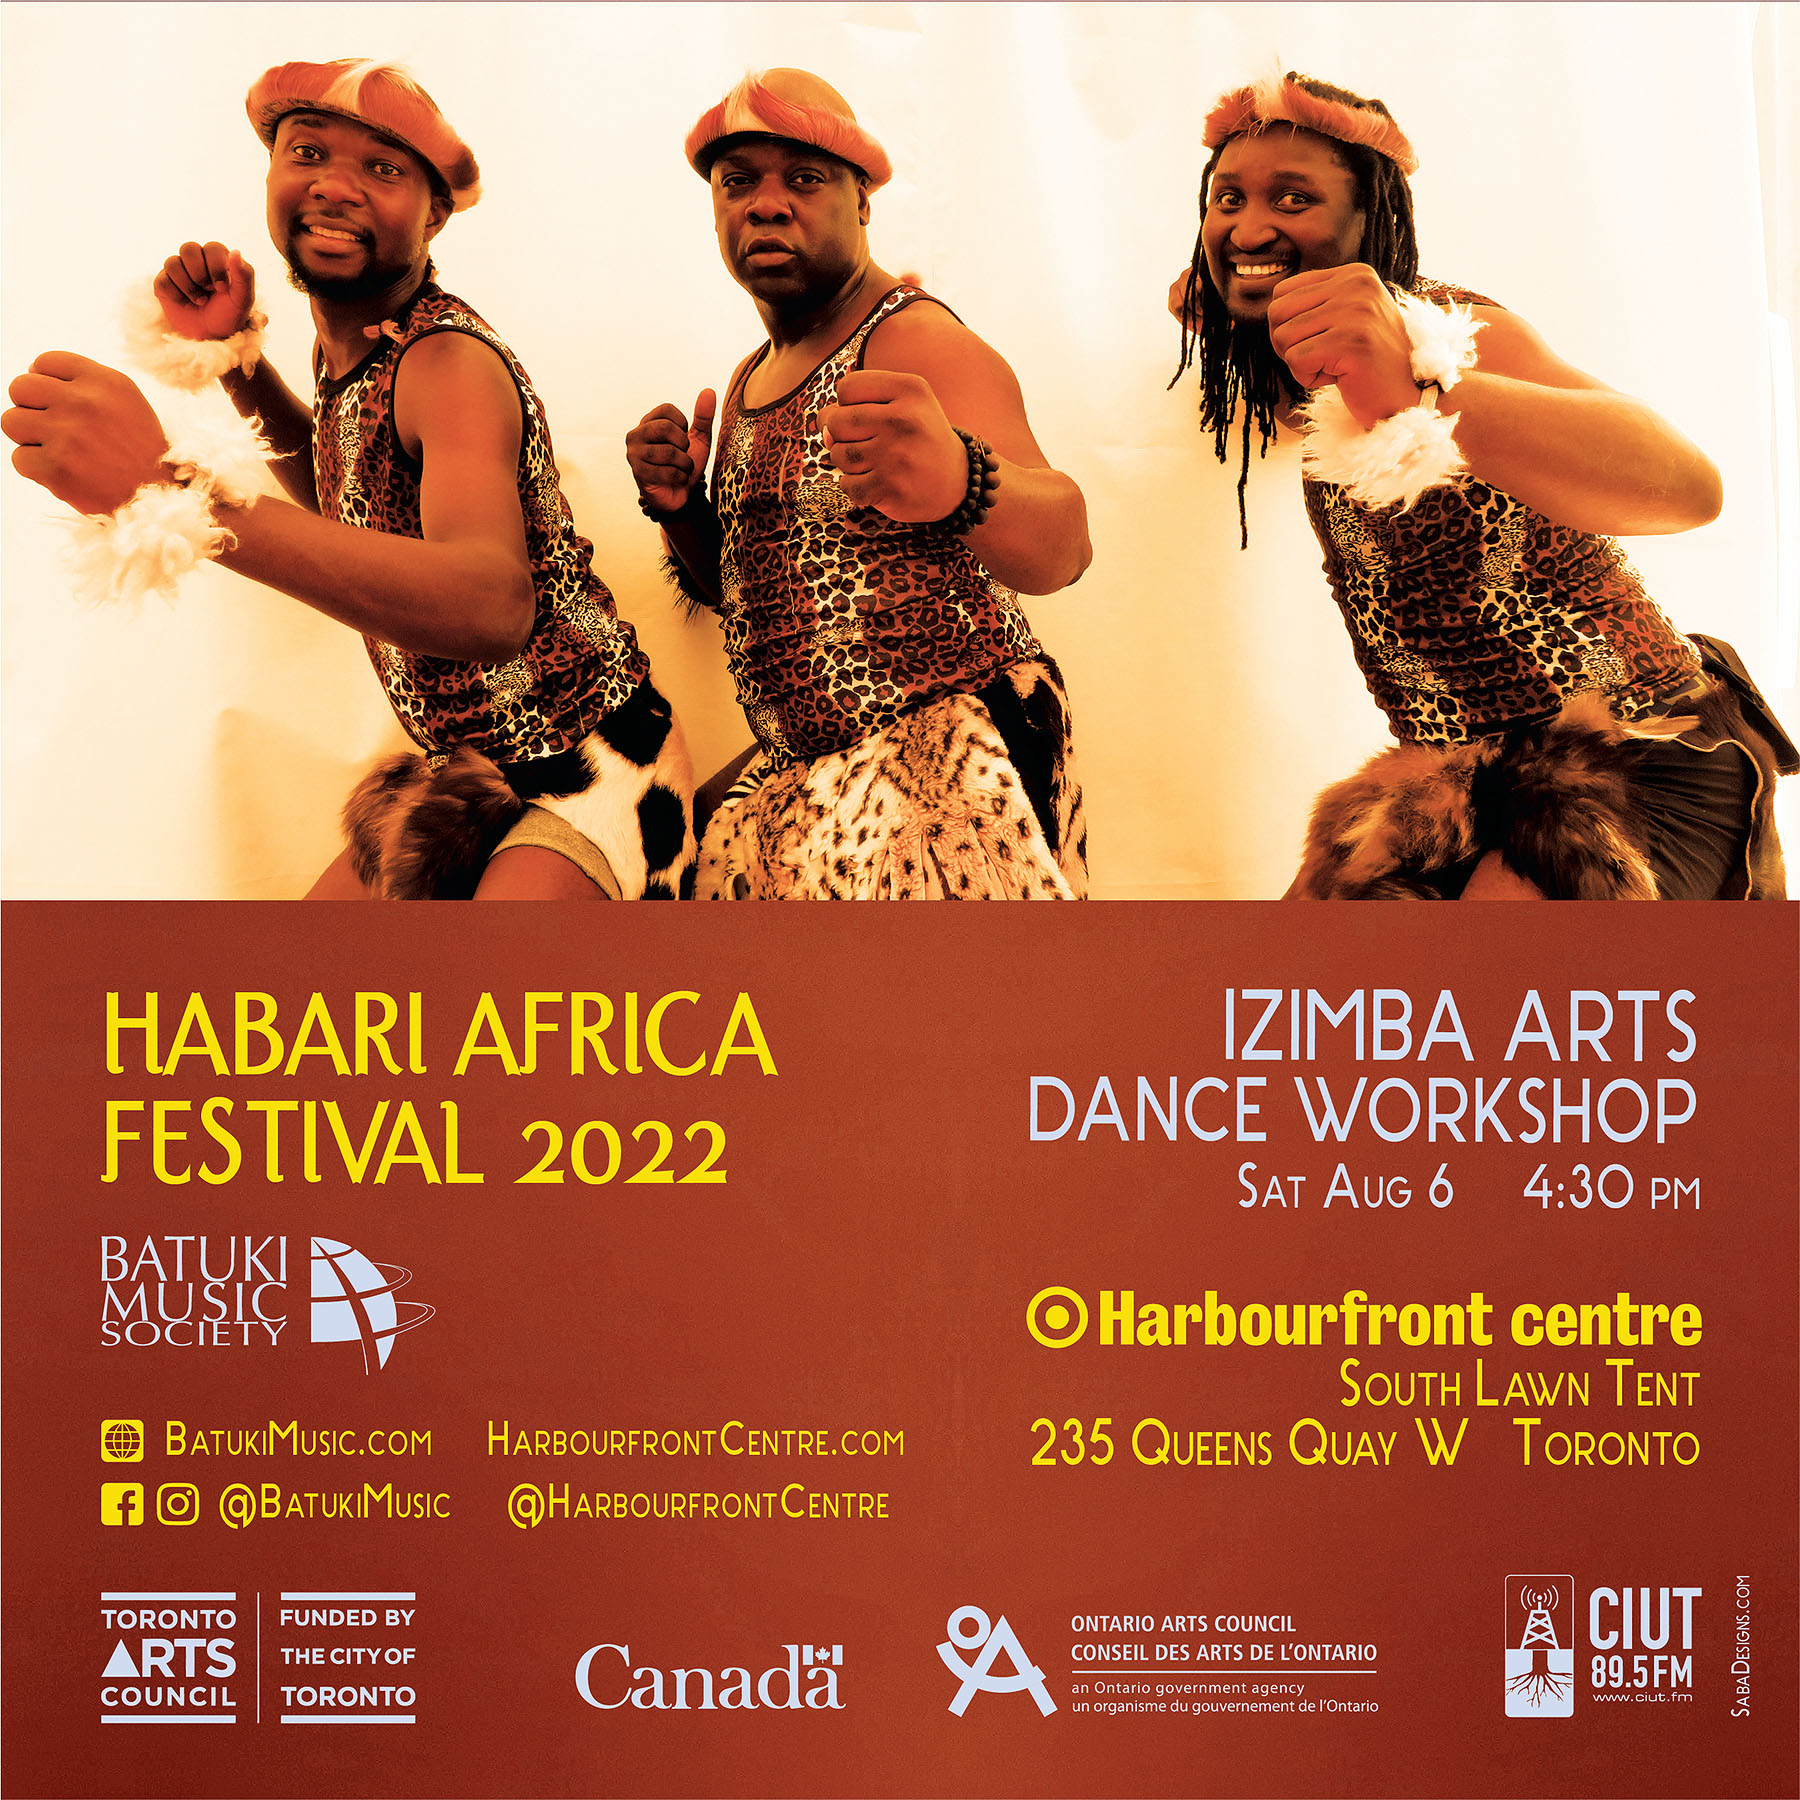 Habari Africa Live Festival 2022 by Batuki Music Society Izimba Arts Dance Workshop